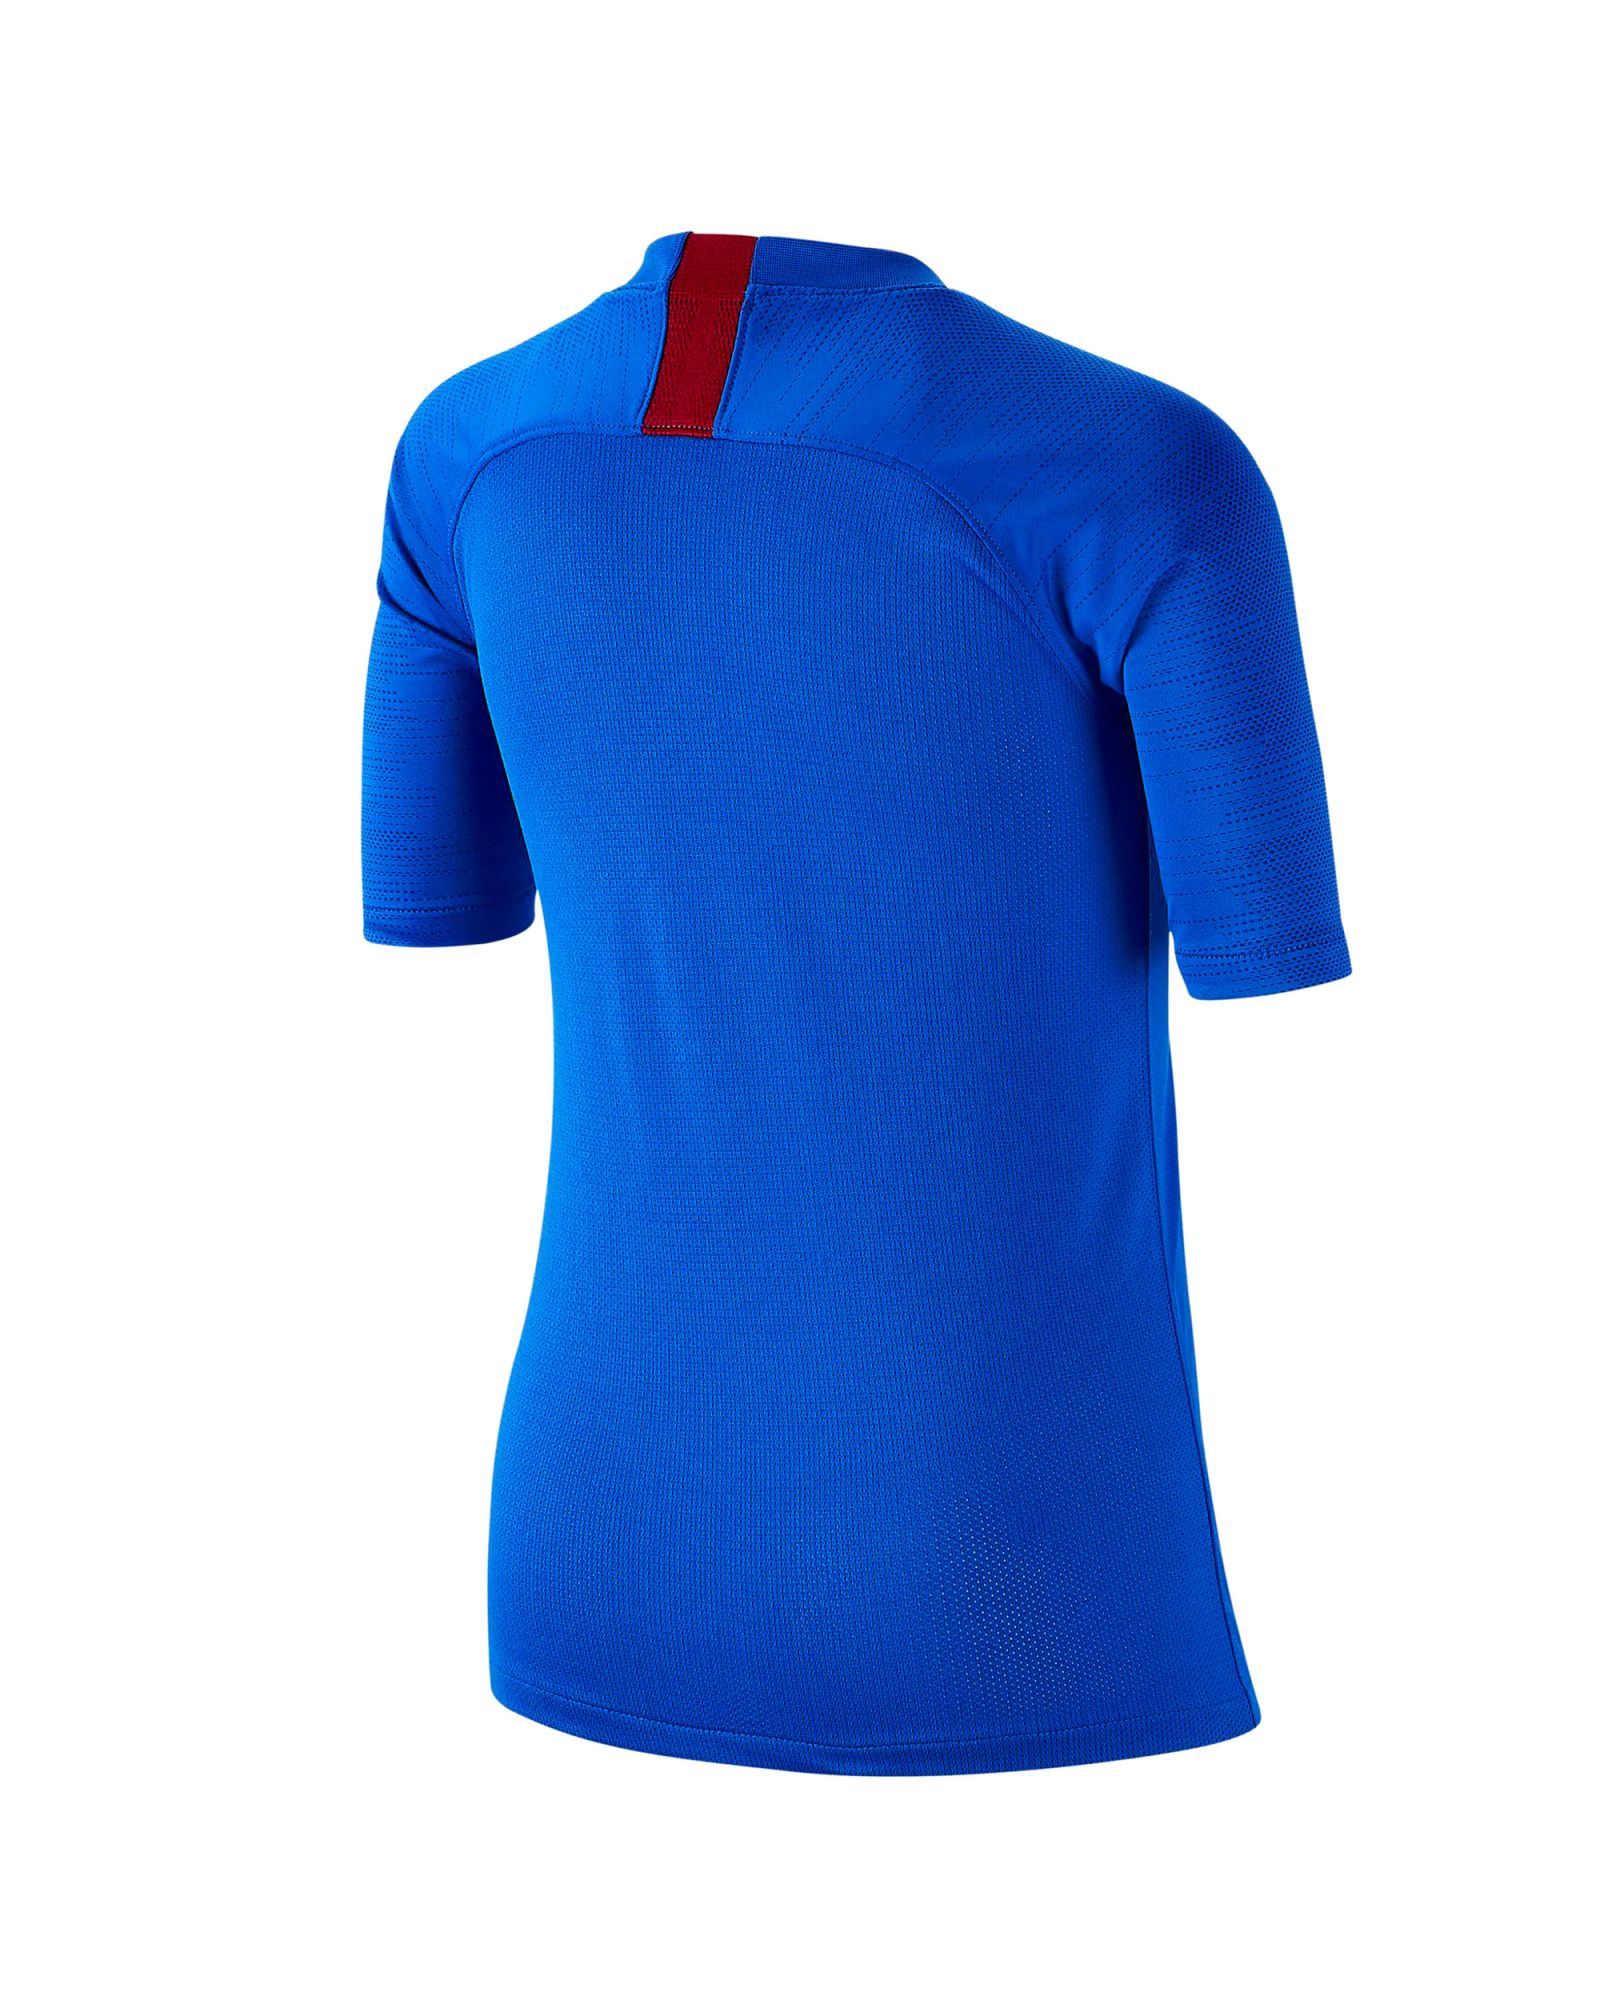 Camiseta de Training FC Barcelona 2019/2020 Dri-FIT Strike Junior Azul - Fútbol Factory